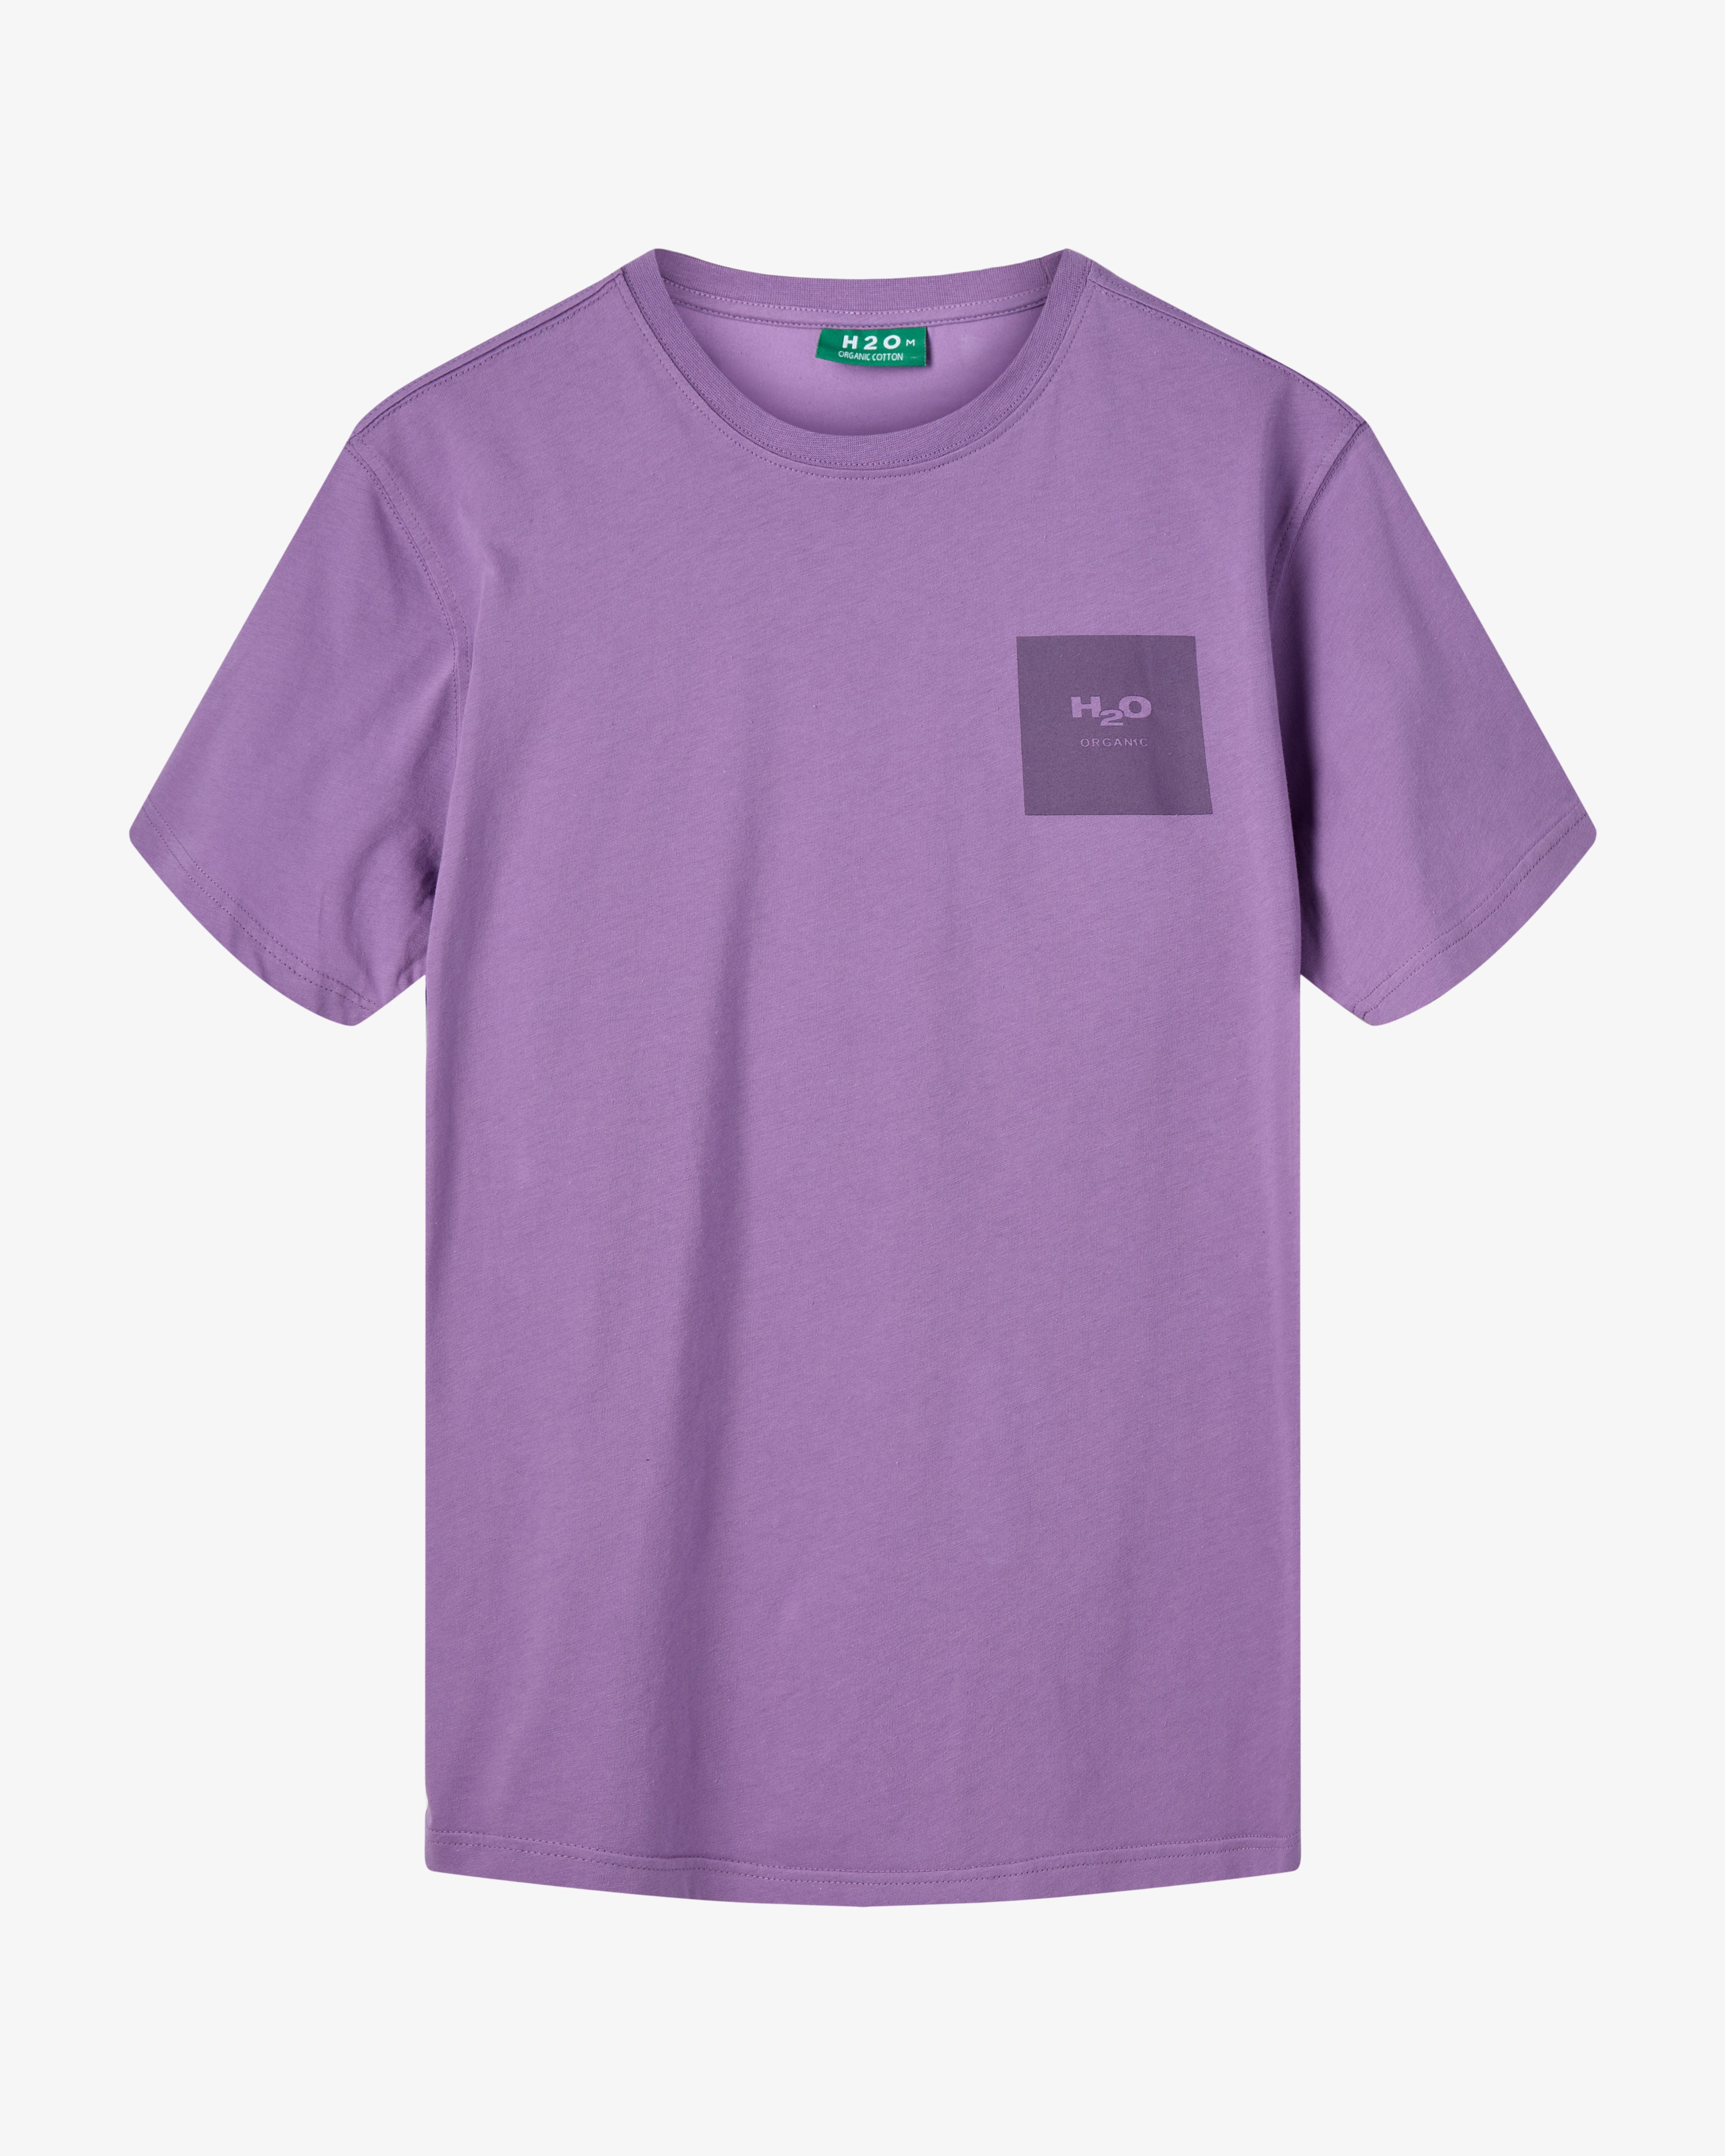 Lyø Organic T-shirt - Amethyst